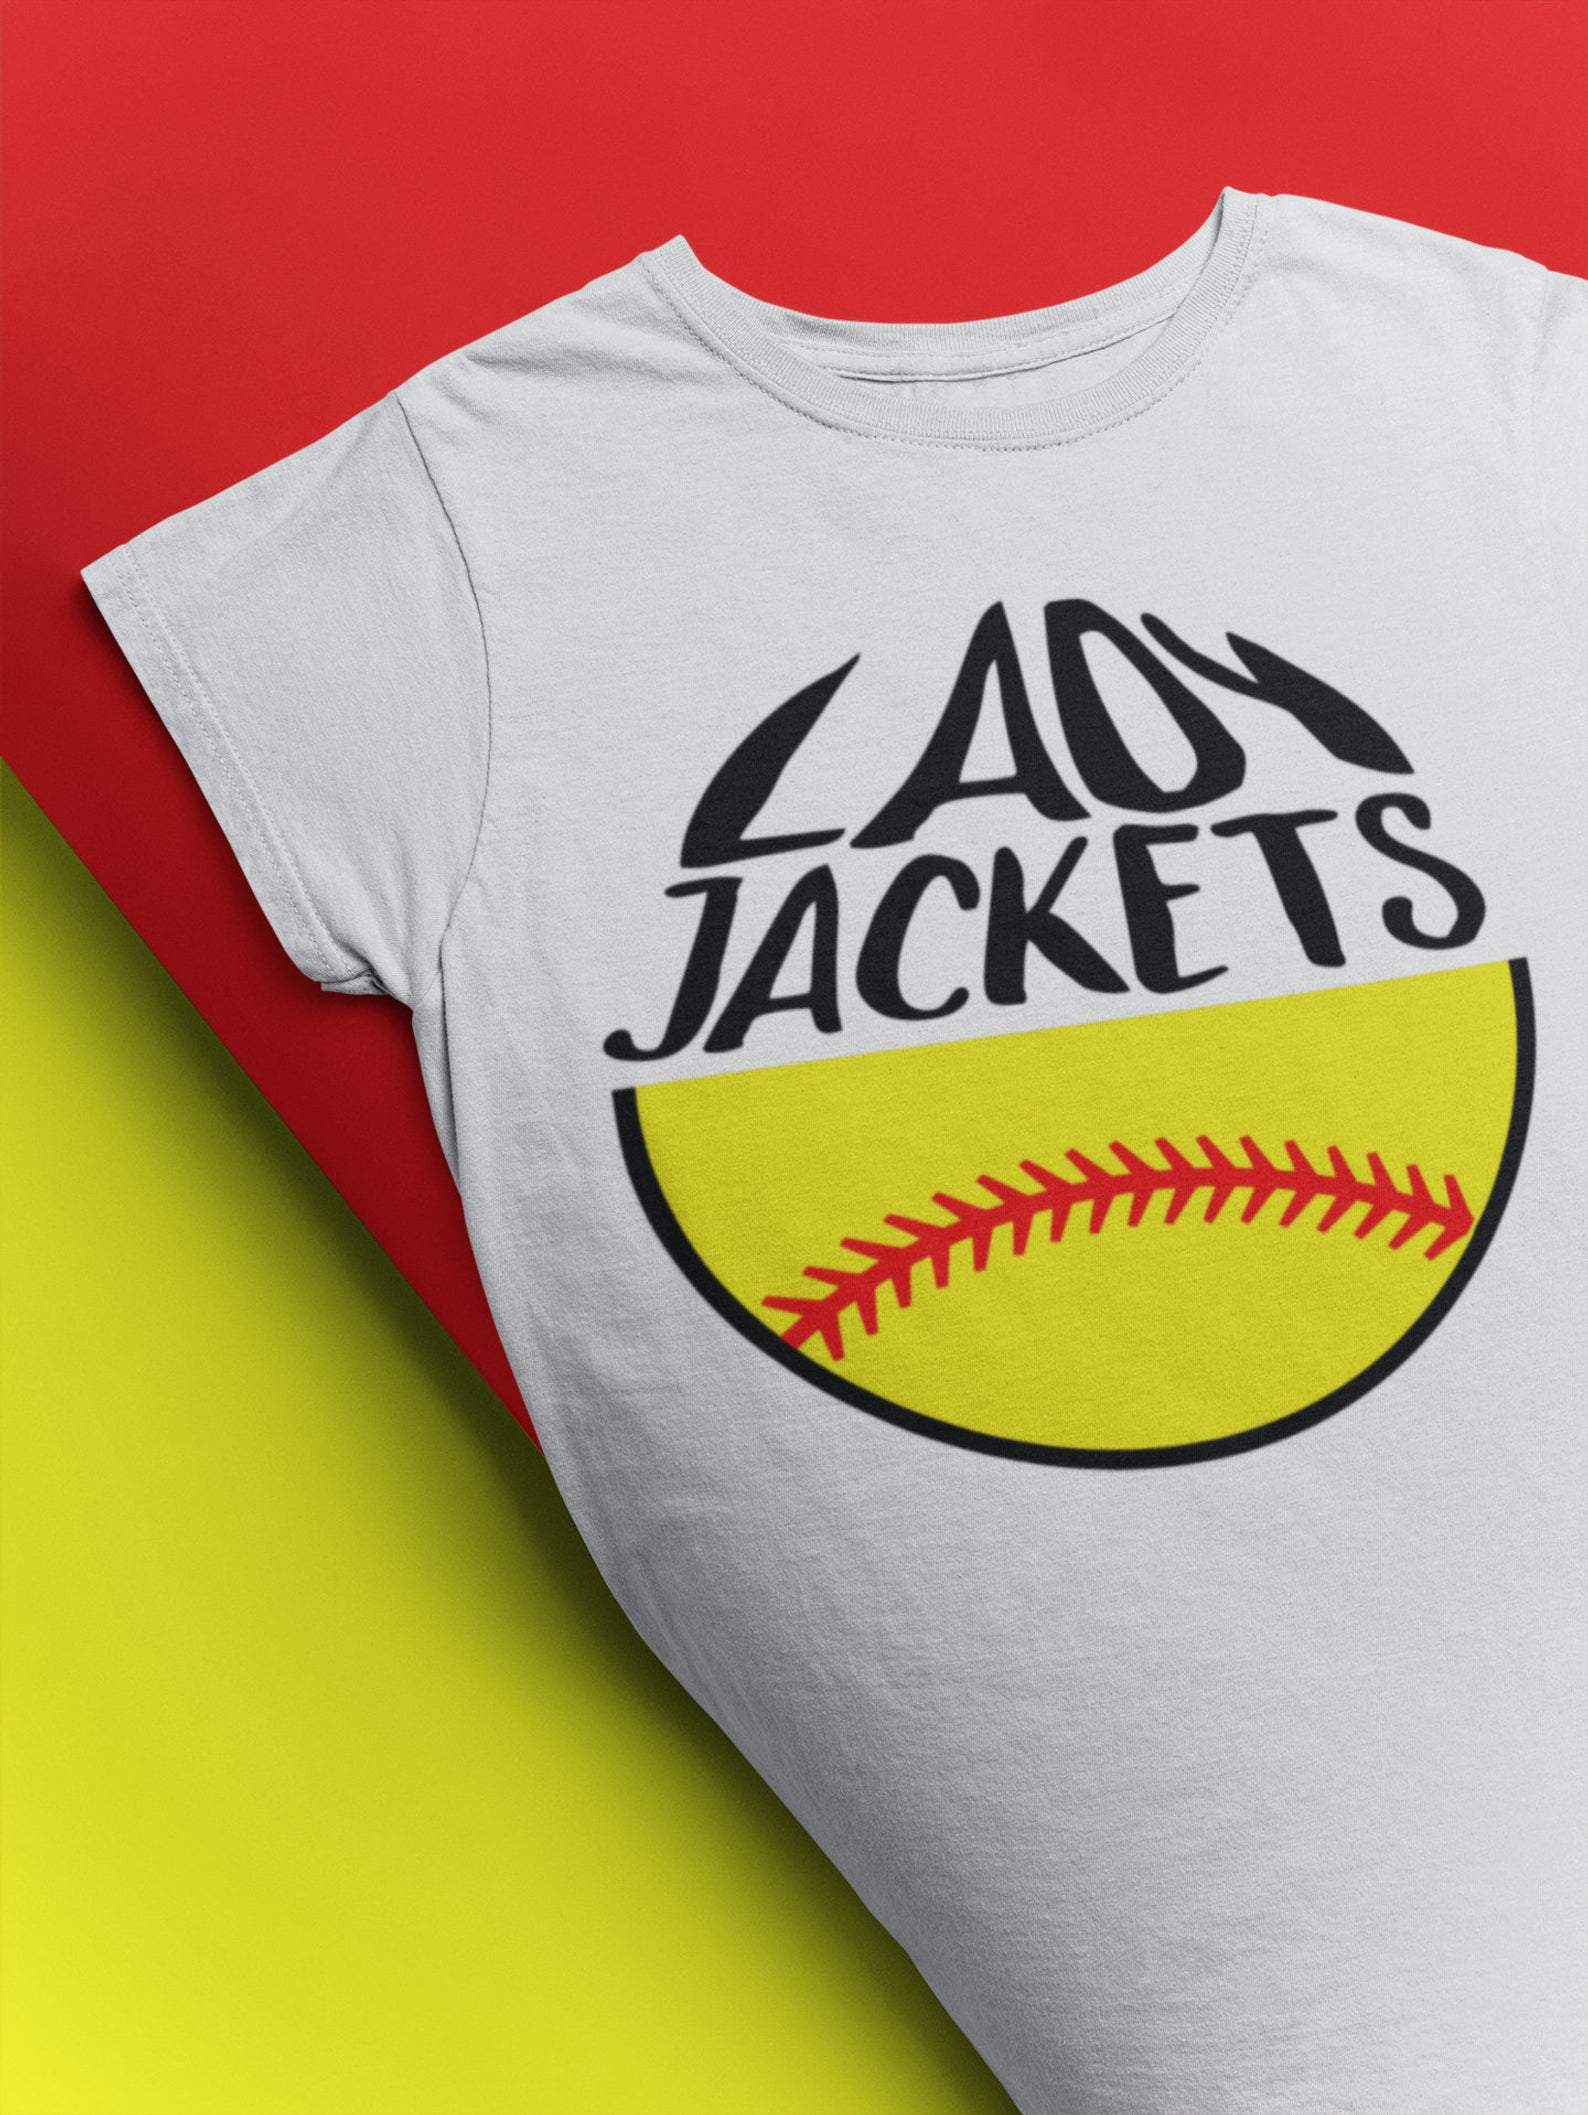 Download Ladyjackets Svg Lady Jackets Yellowjackets Svg Cut File Softball Coach Softball Shirt So Fontsy